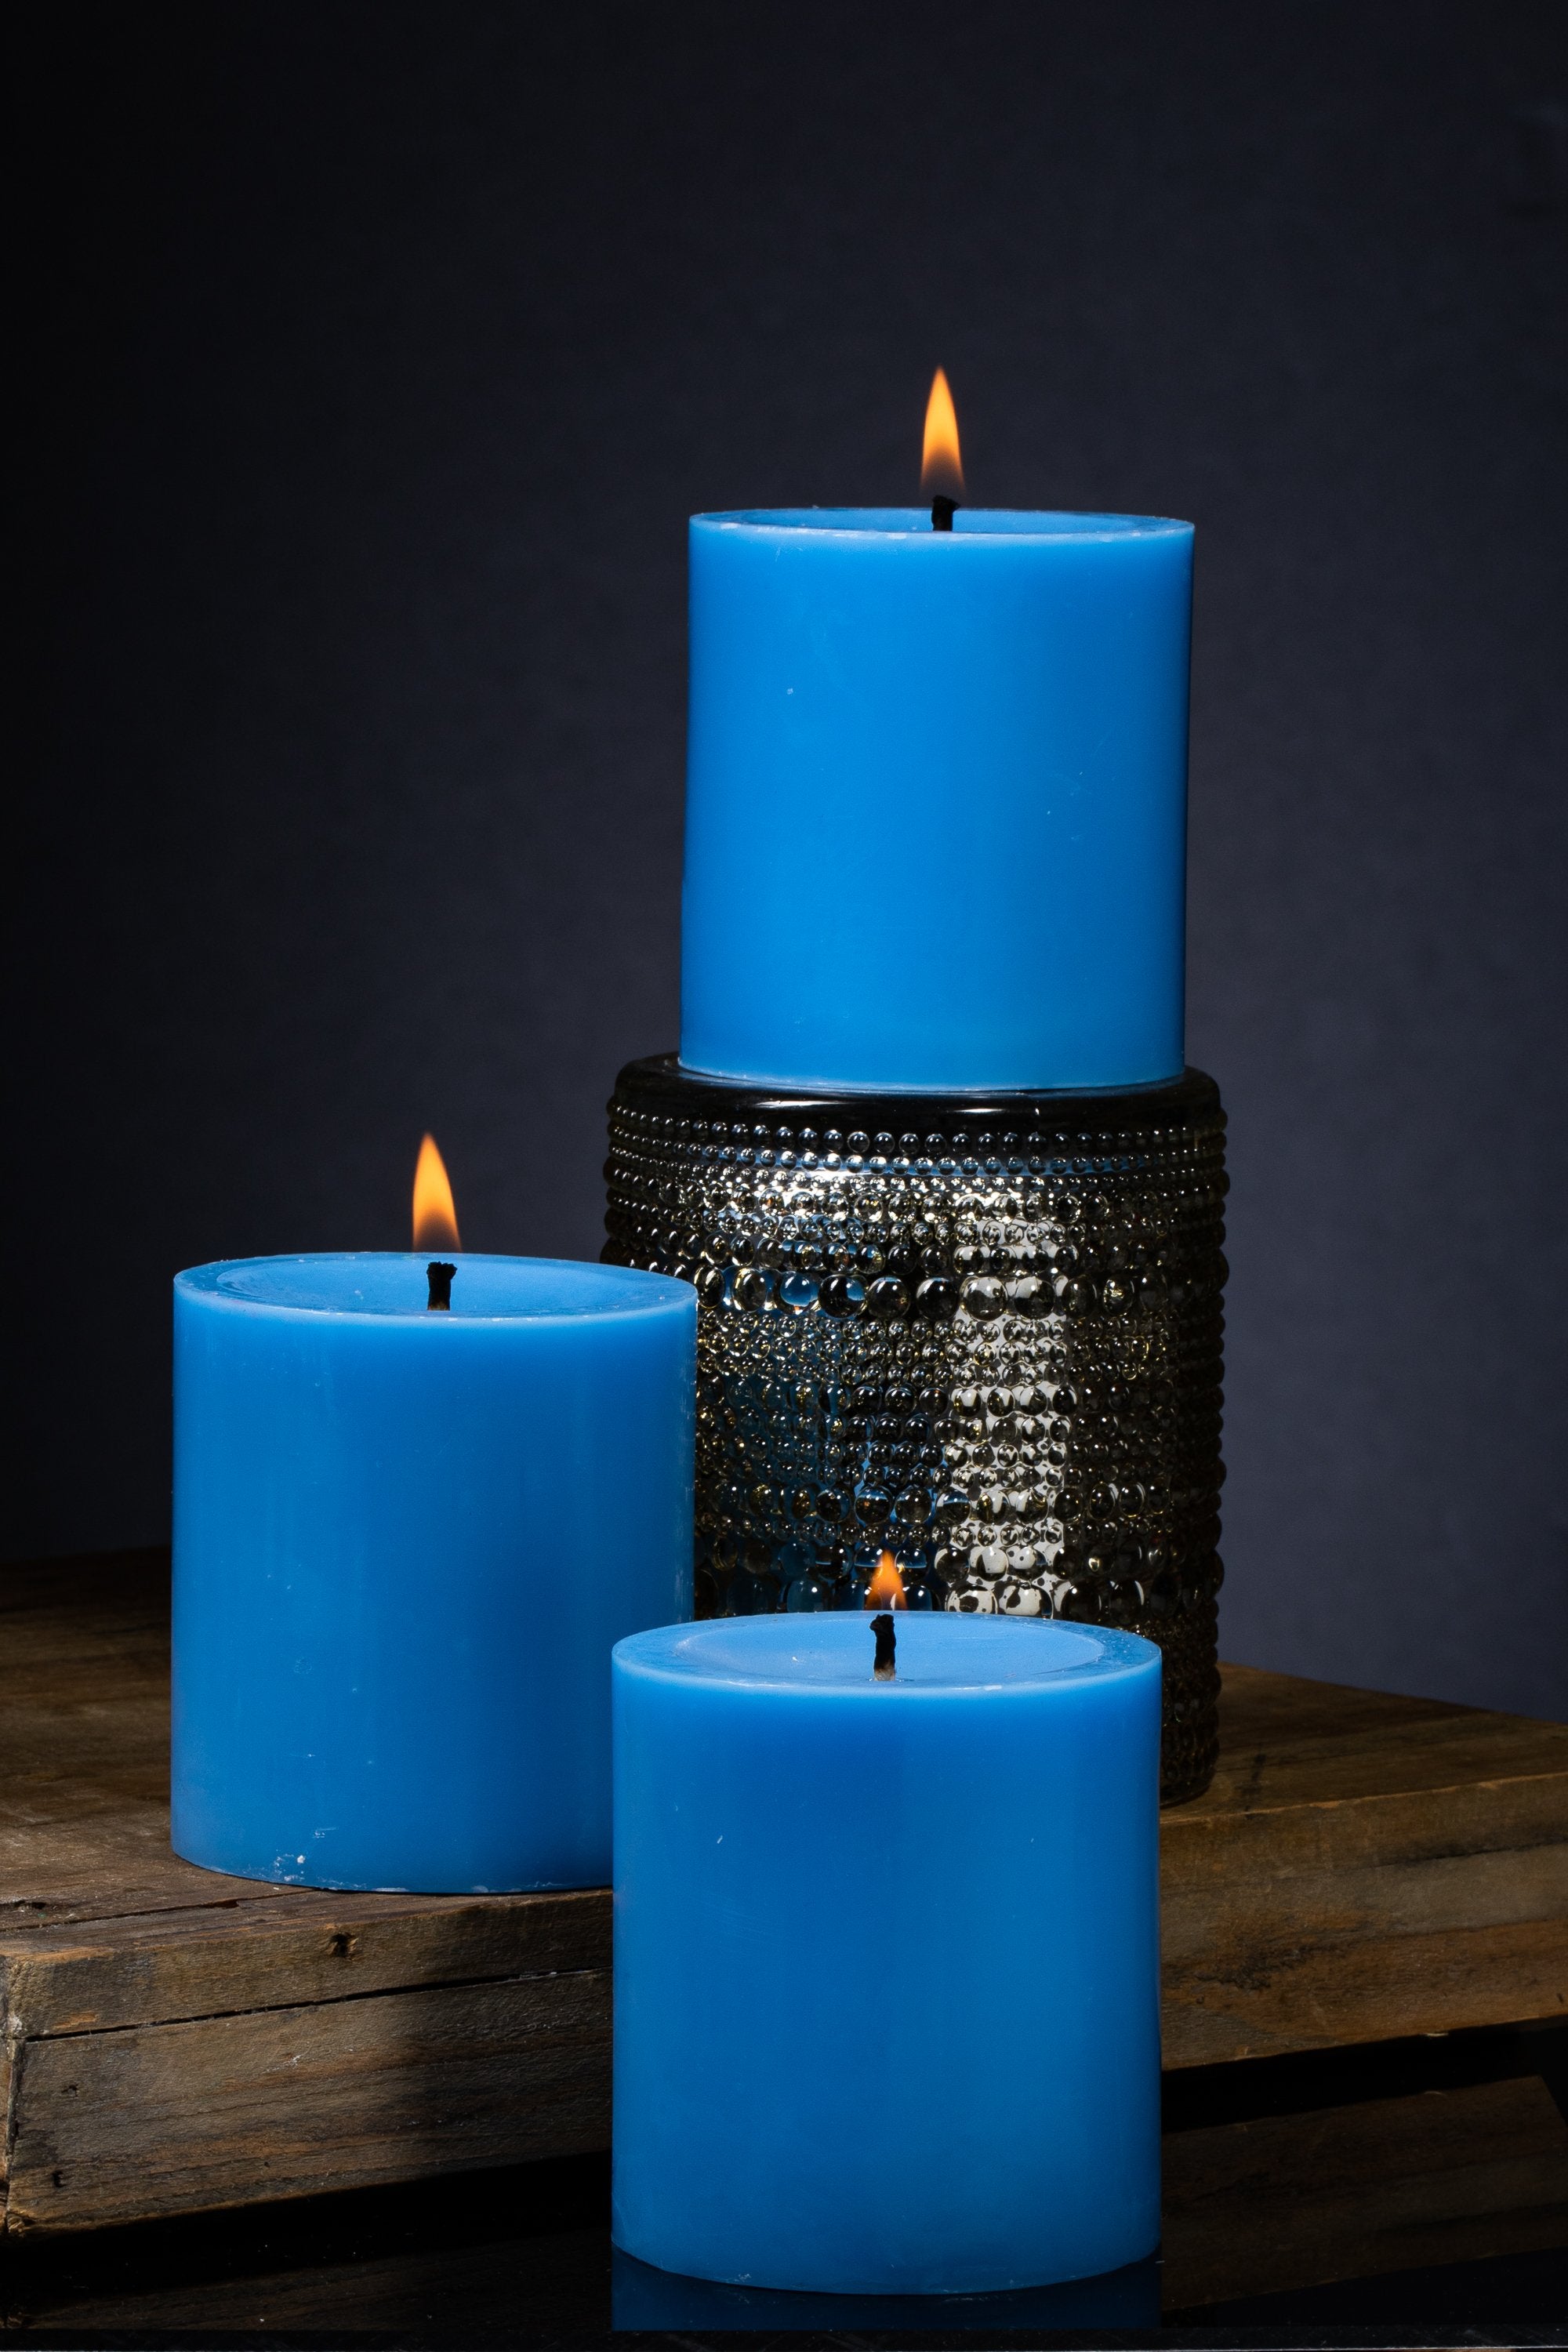 Richland Pillar Candle 3"x3" Light Blue Set of 48